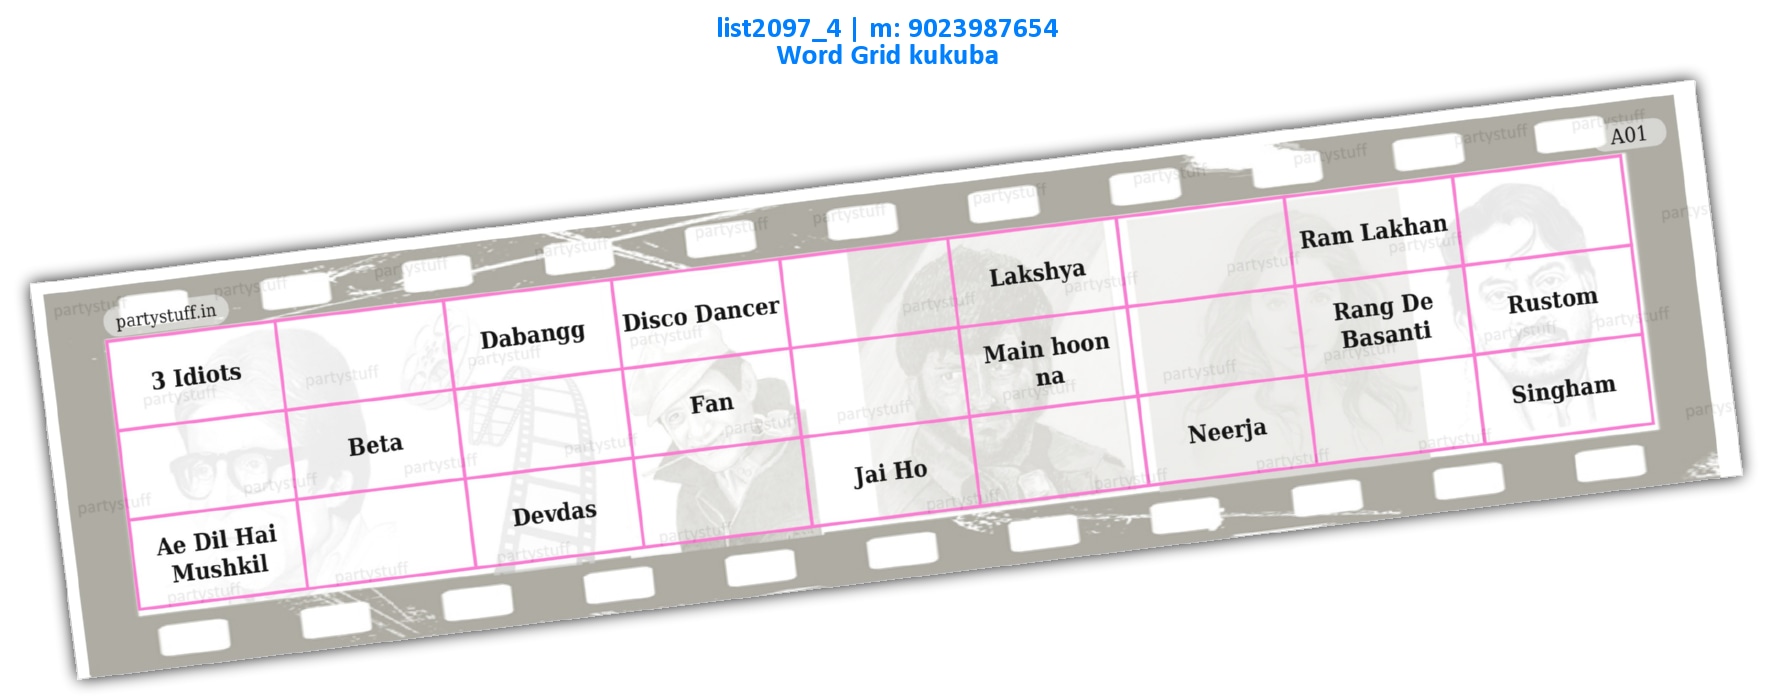 Bollywood Movies Dialogues 2 | Printed list2097_4 Printed Tambola Housie